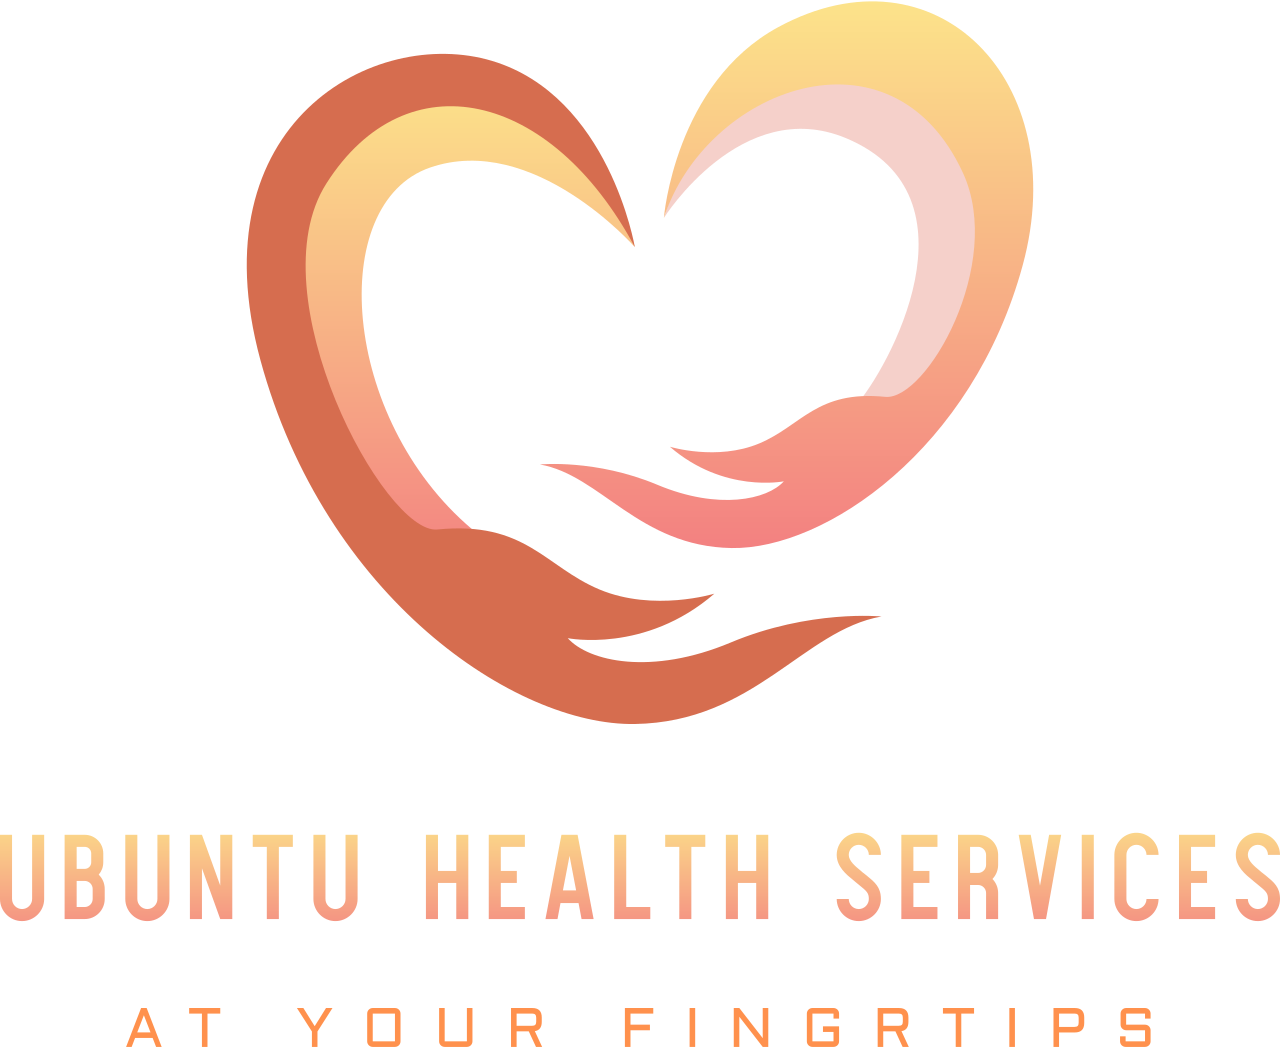 Ubuntu Health Services's logo